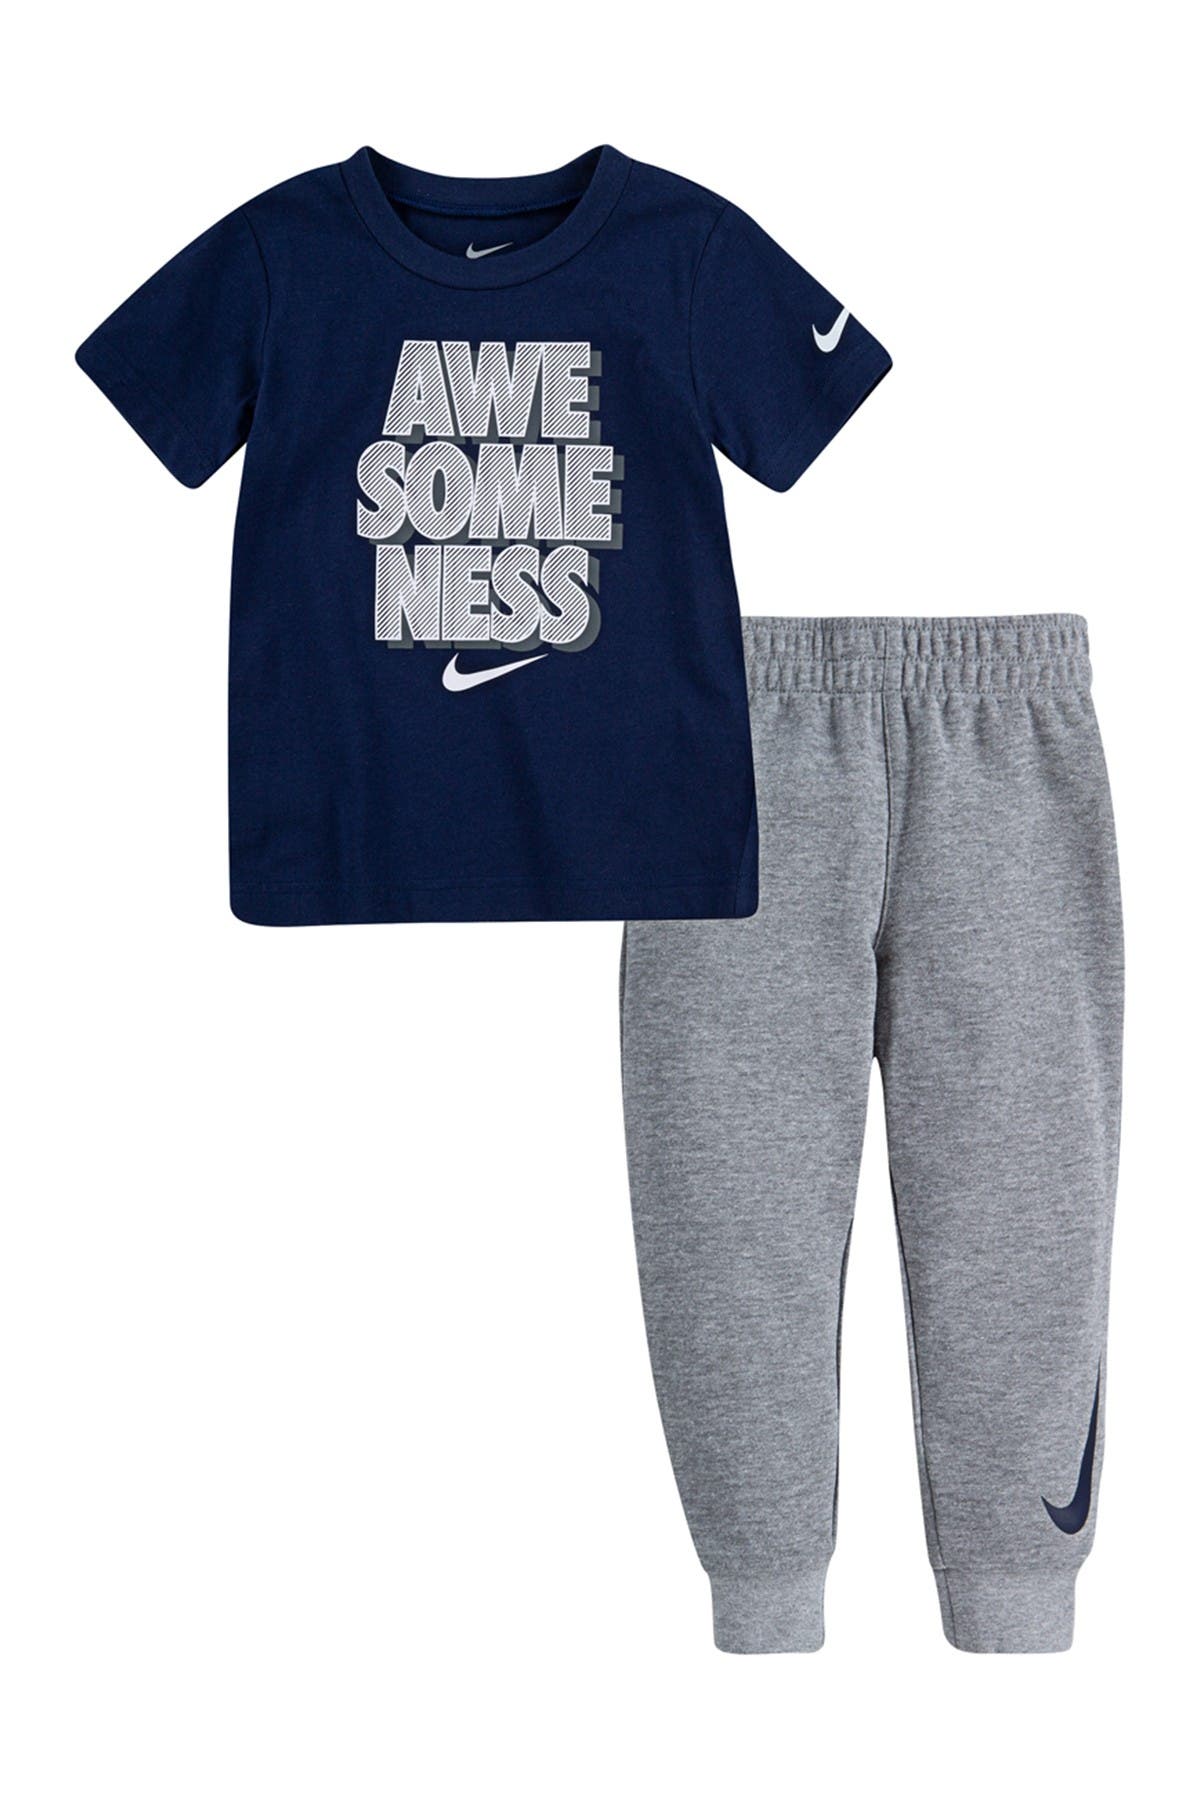 Nike Kids' Clothing | Nordstrom Rack